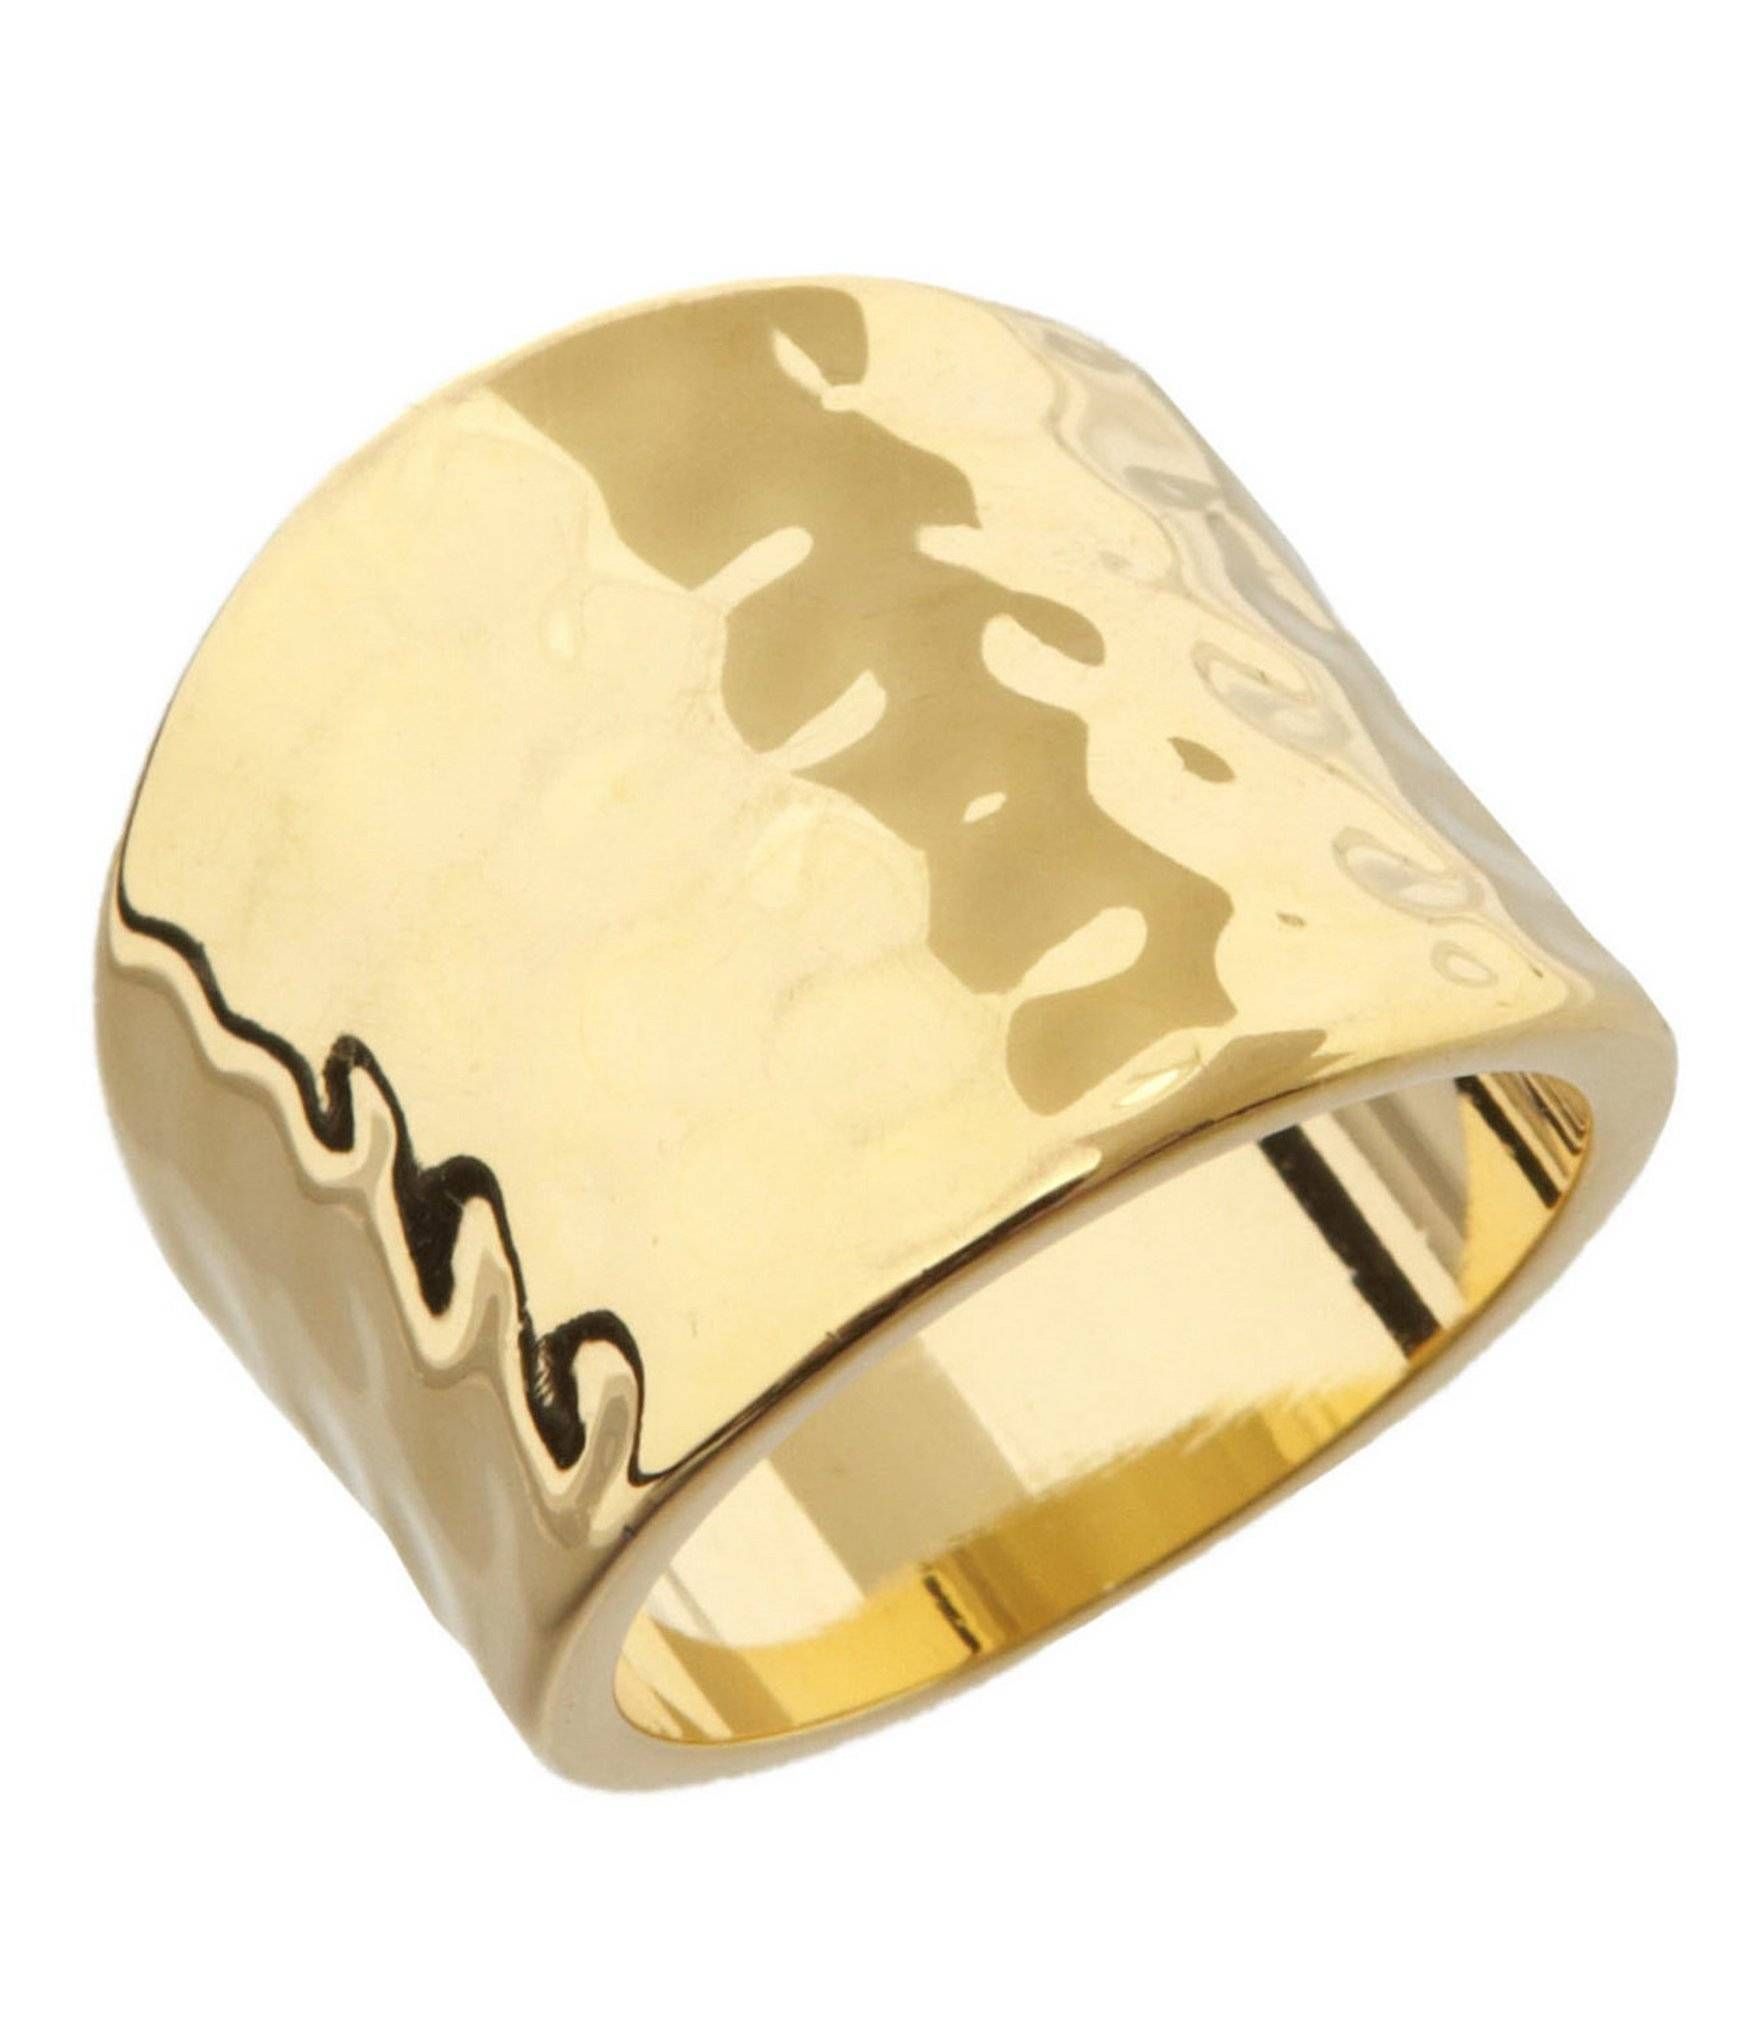 Accessories | Jewelry | Rings | Dillards Pertaining To Dillards Wedding Rings (View 11 of 15)